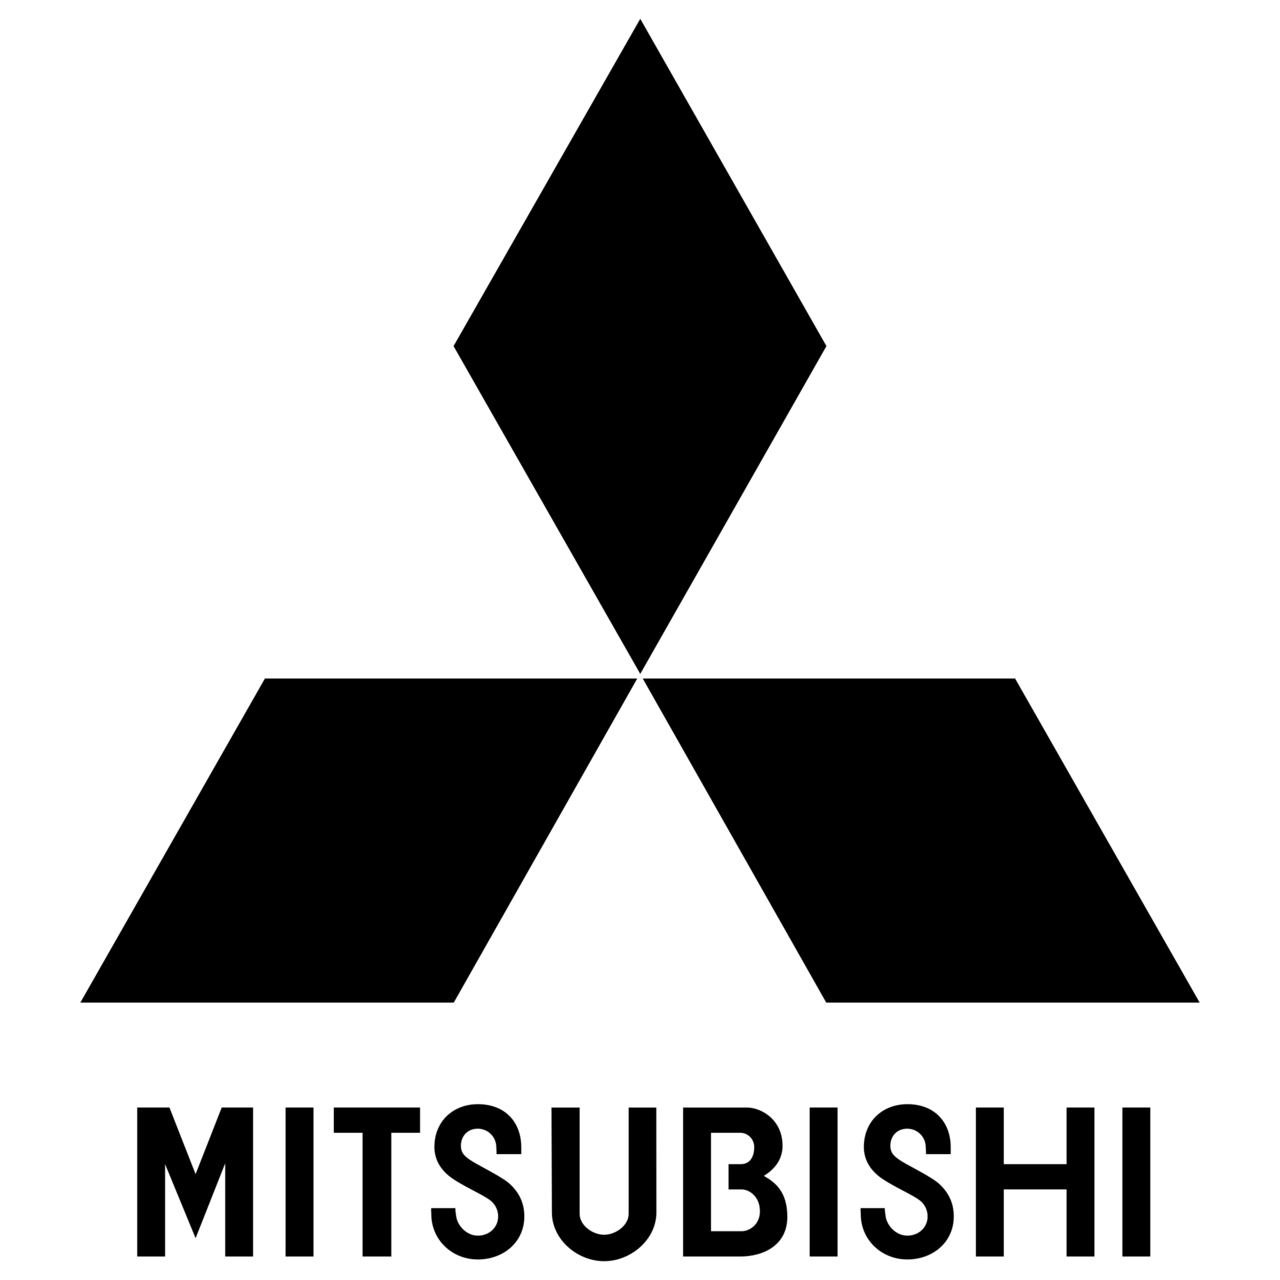 mitsubishi-logo-black-and-white-1.png